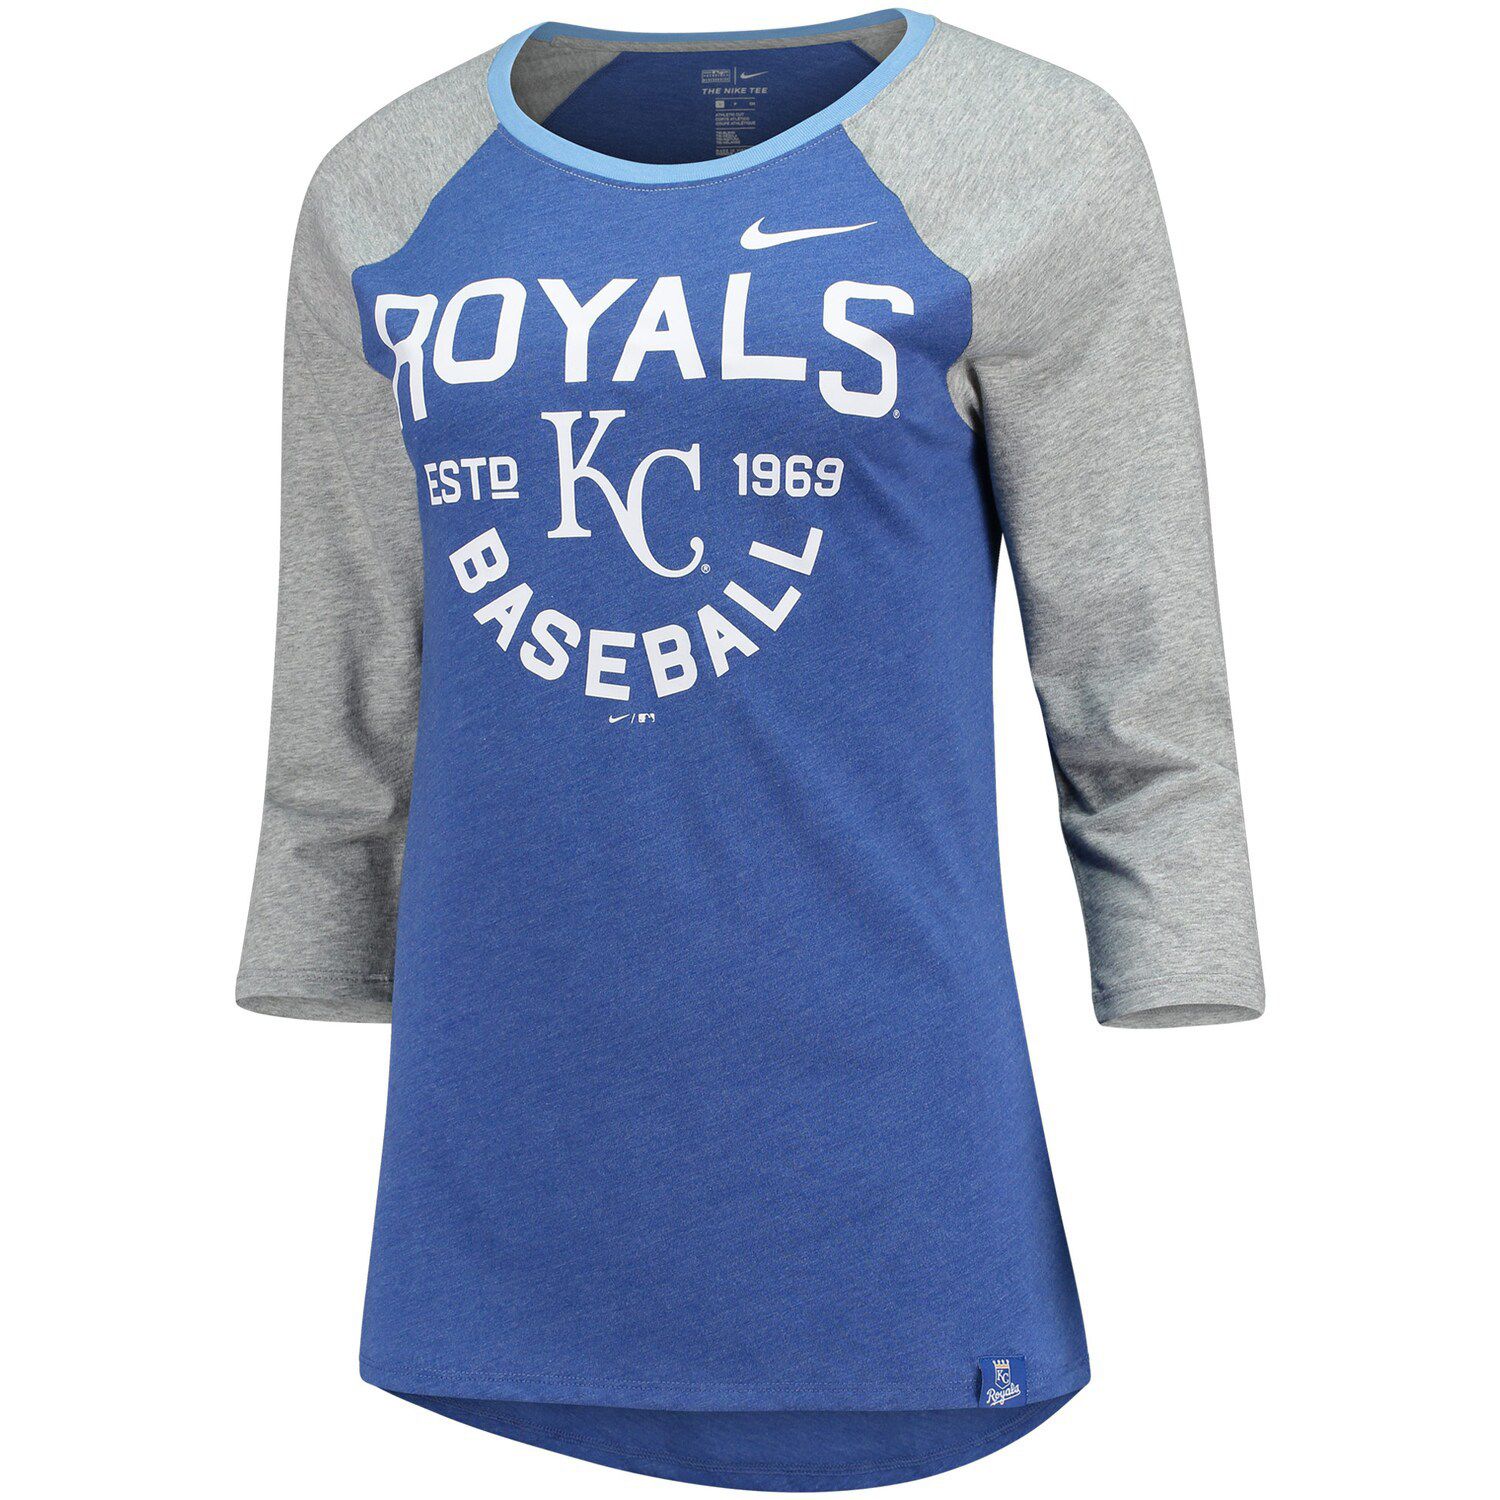 kc royals women's t shirts